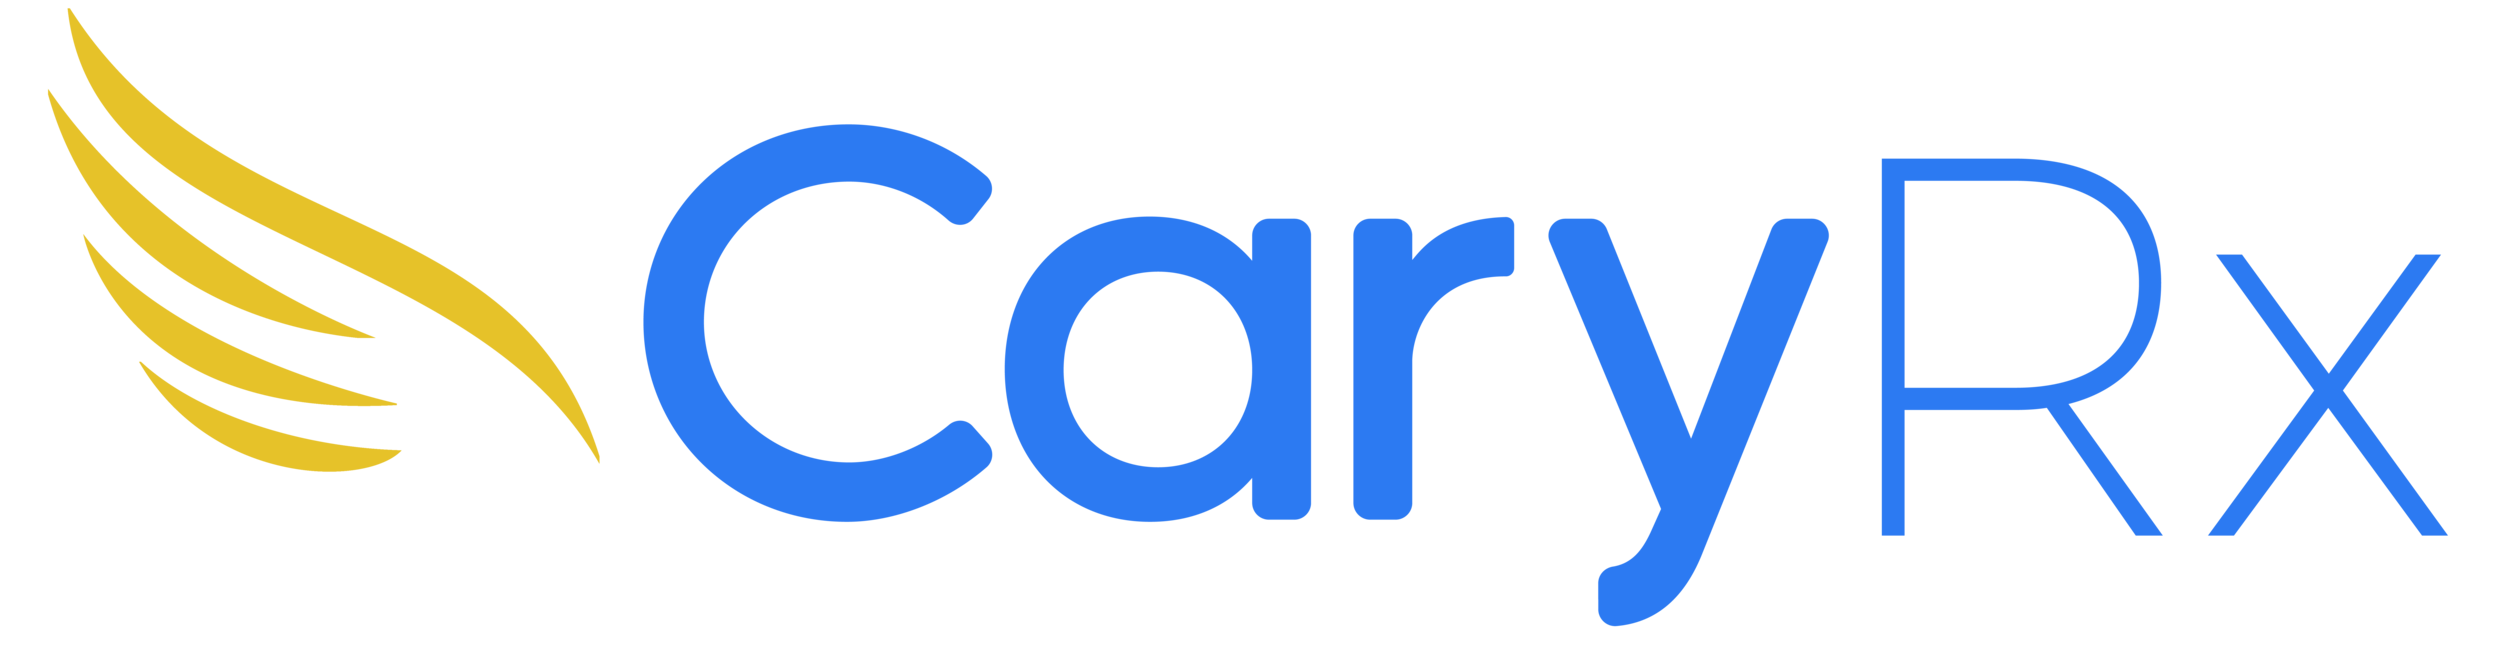 CaryRx Logo Blue-01-01-01.png